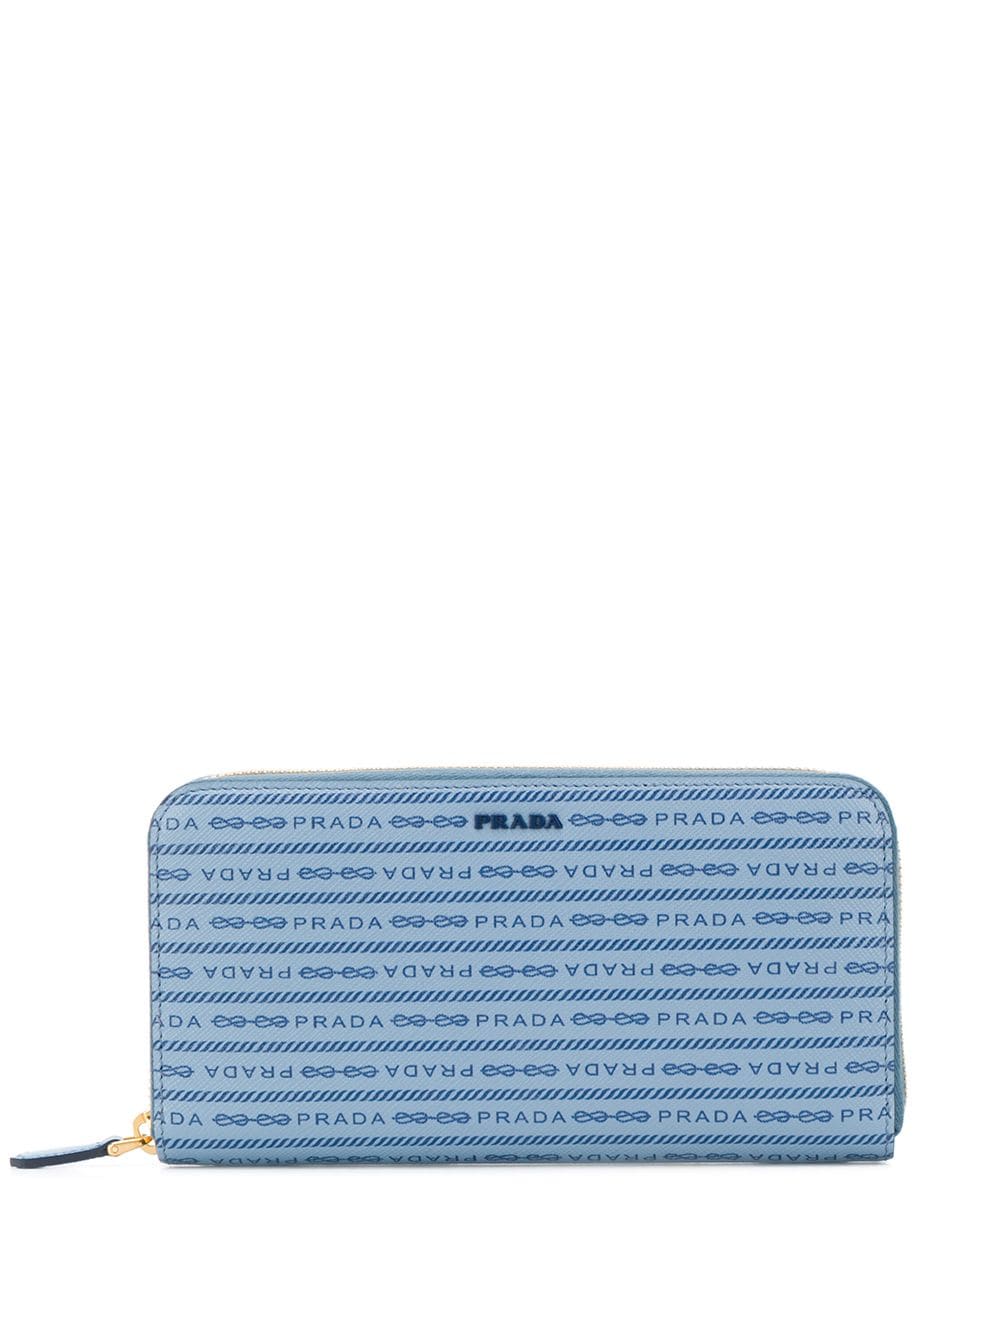 фото Prada кошелек с логотипом